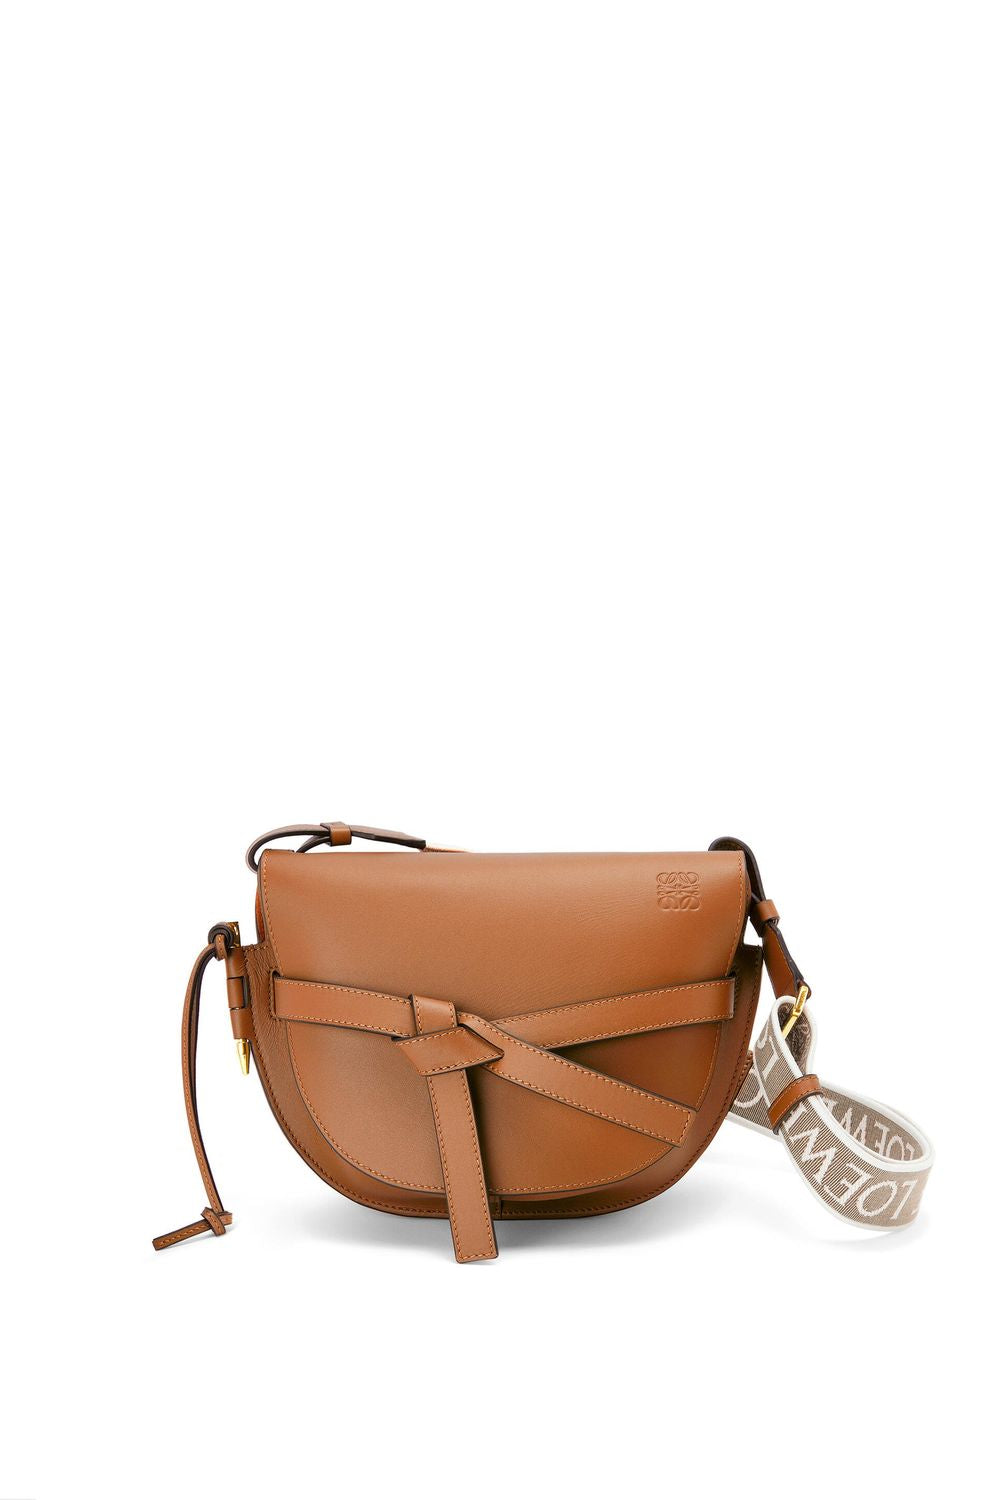 LOEWE Tan Calfskin Mini Gate Crossbody Handbag with Embossed Logo, Adjustable Strap, and Knot Detail - 25x19x11.5 cm